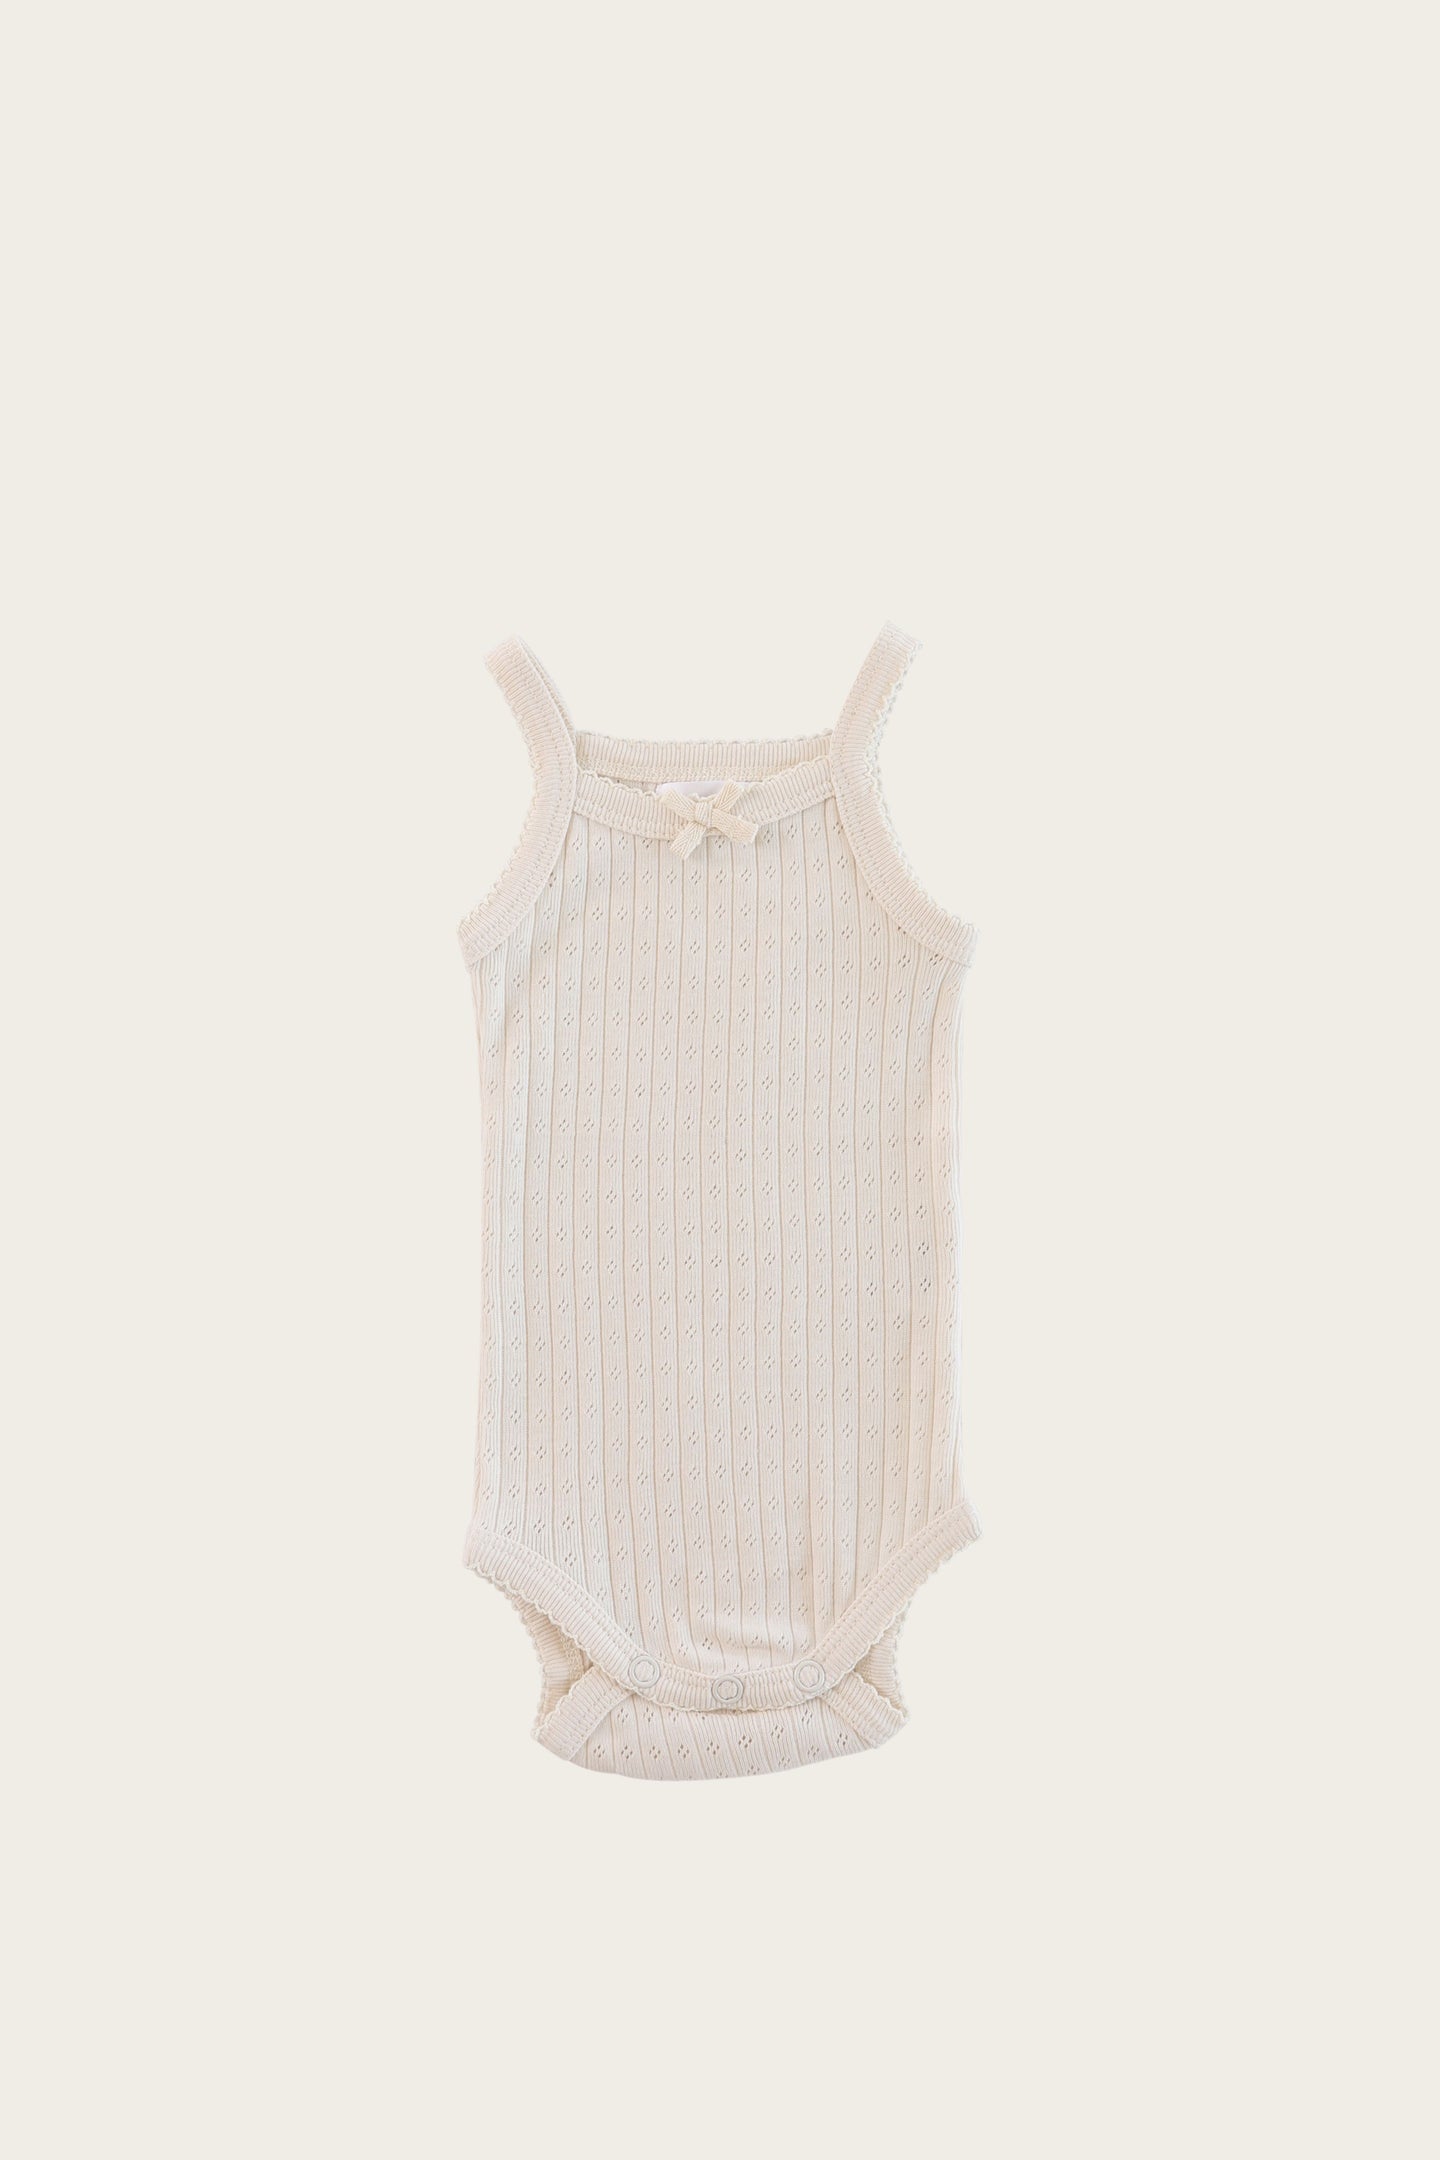 Jamie Kay - Organic Pointelle Singlet Bodysuit - Ivory